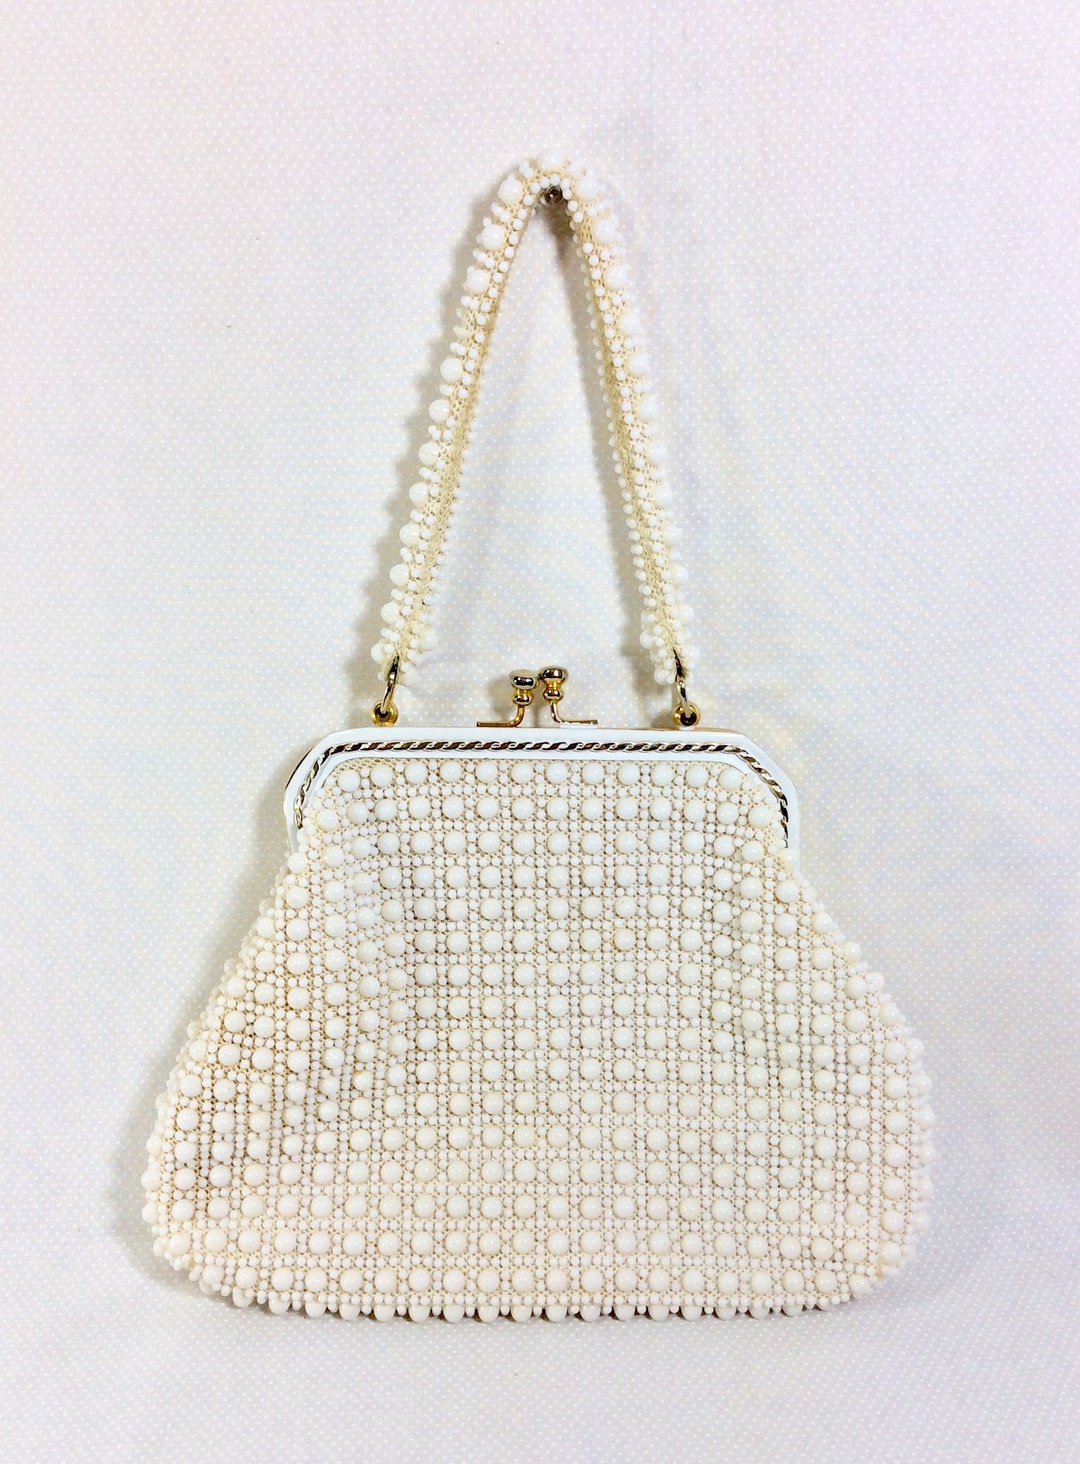 1950s White Beaded Clamshell Handbag With Gold Tone Hardware - Etsy